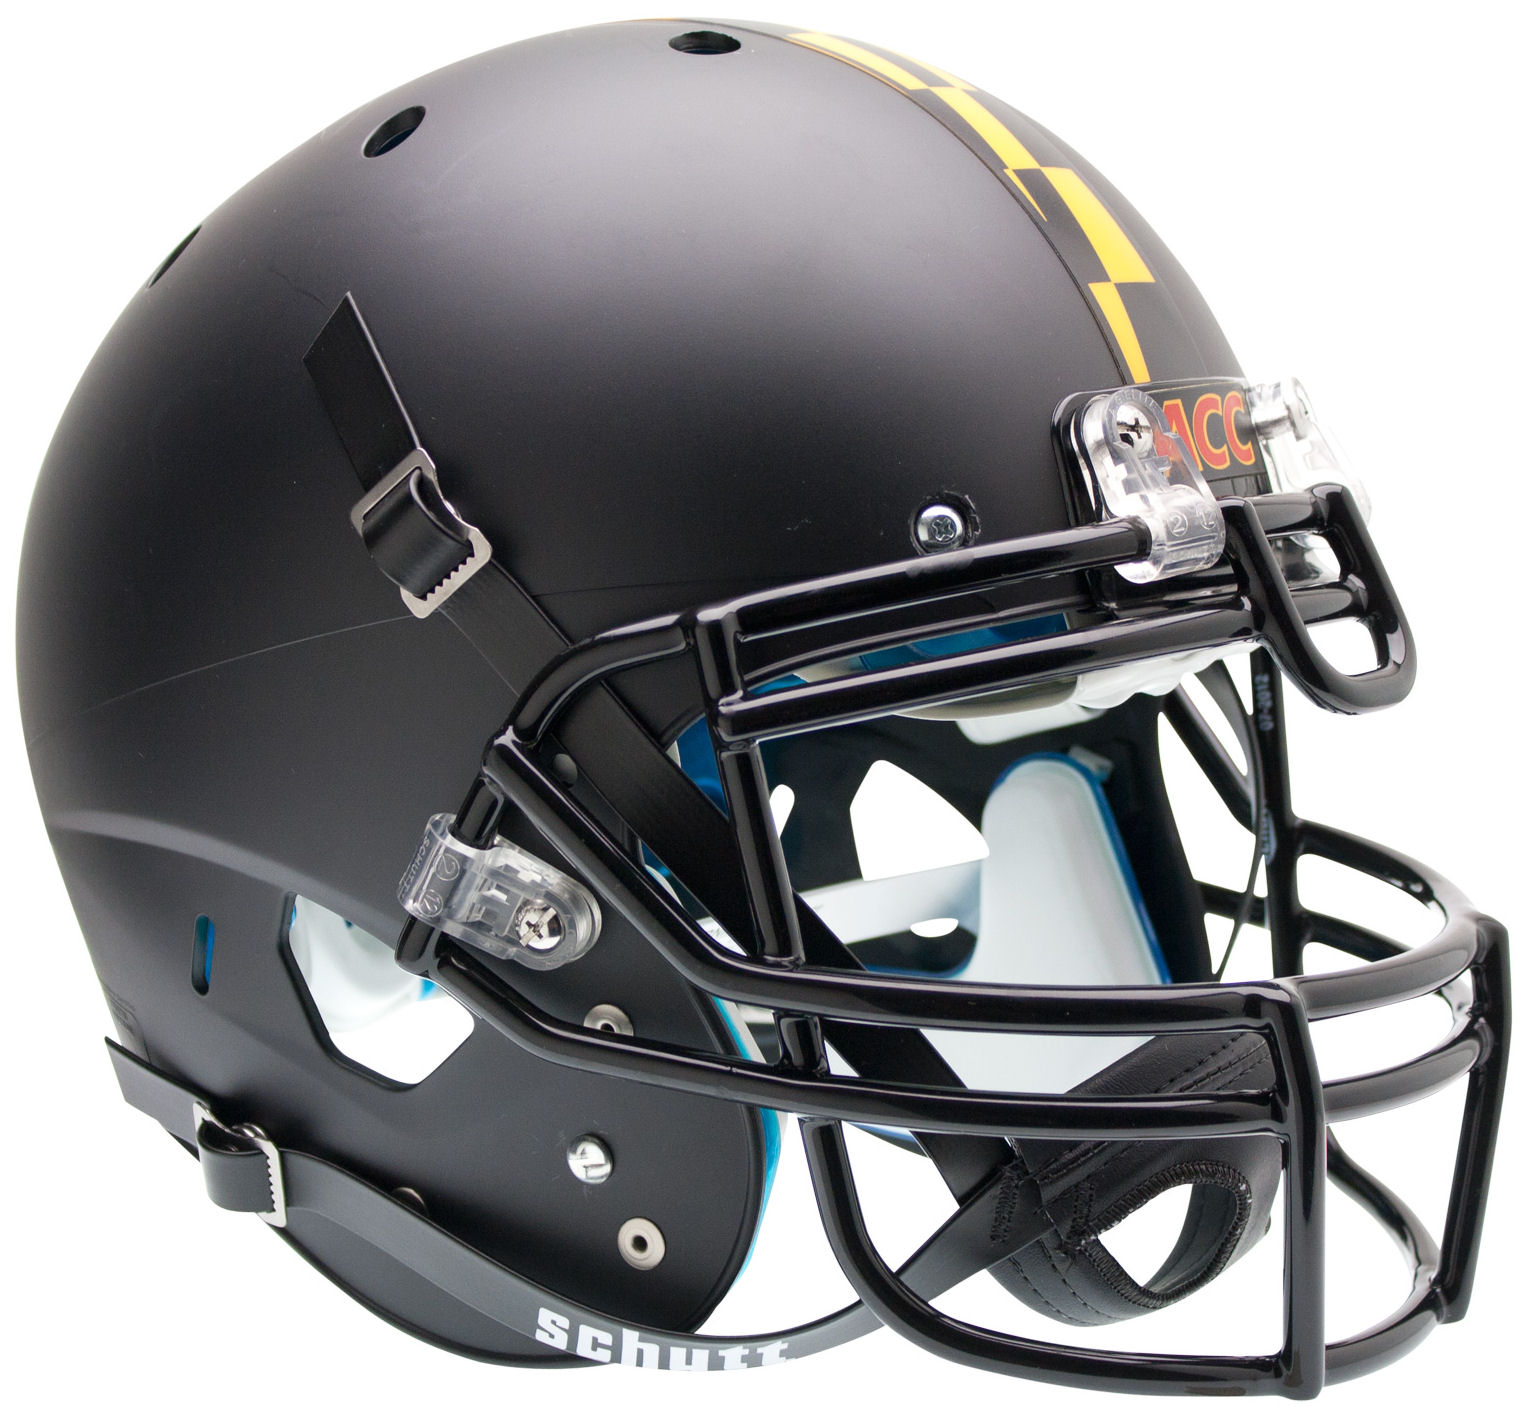 Maryland Terrapins Authentic College Xp Football Helmet Schutt Matte Black